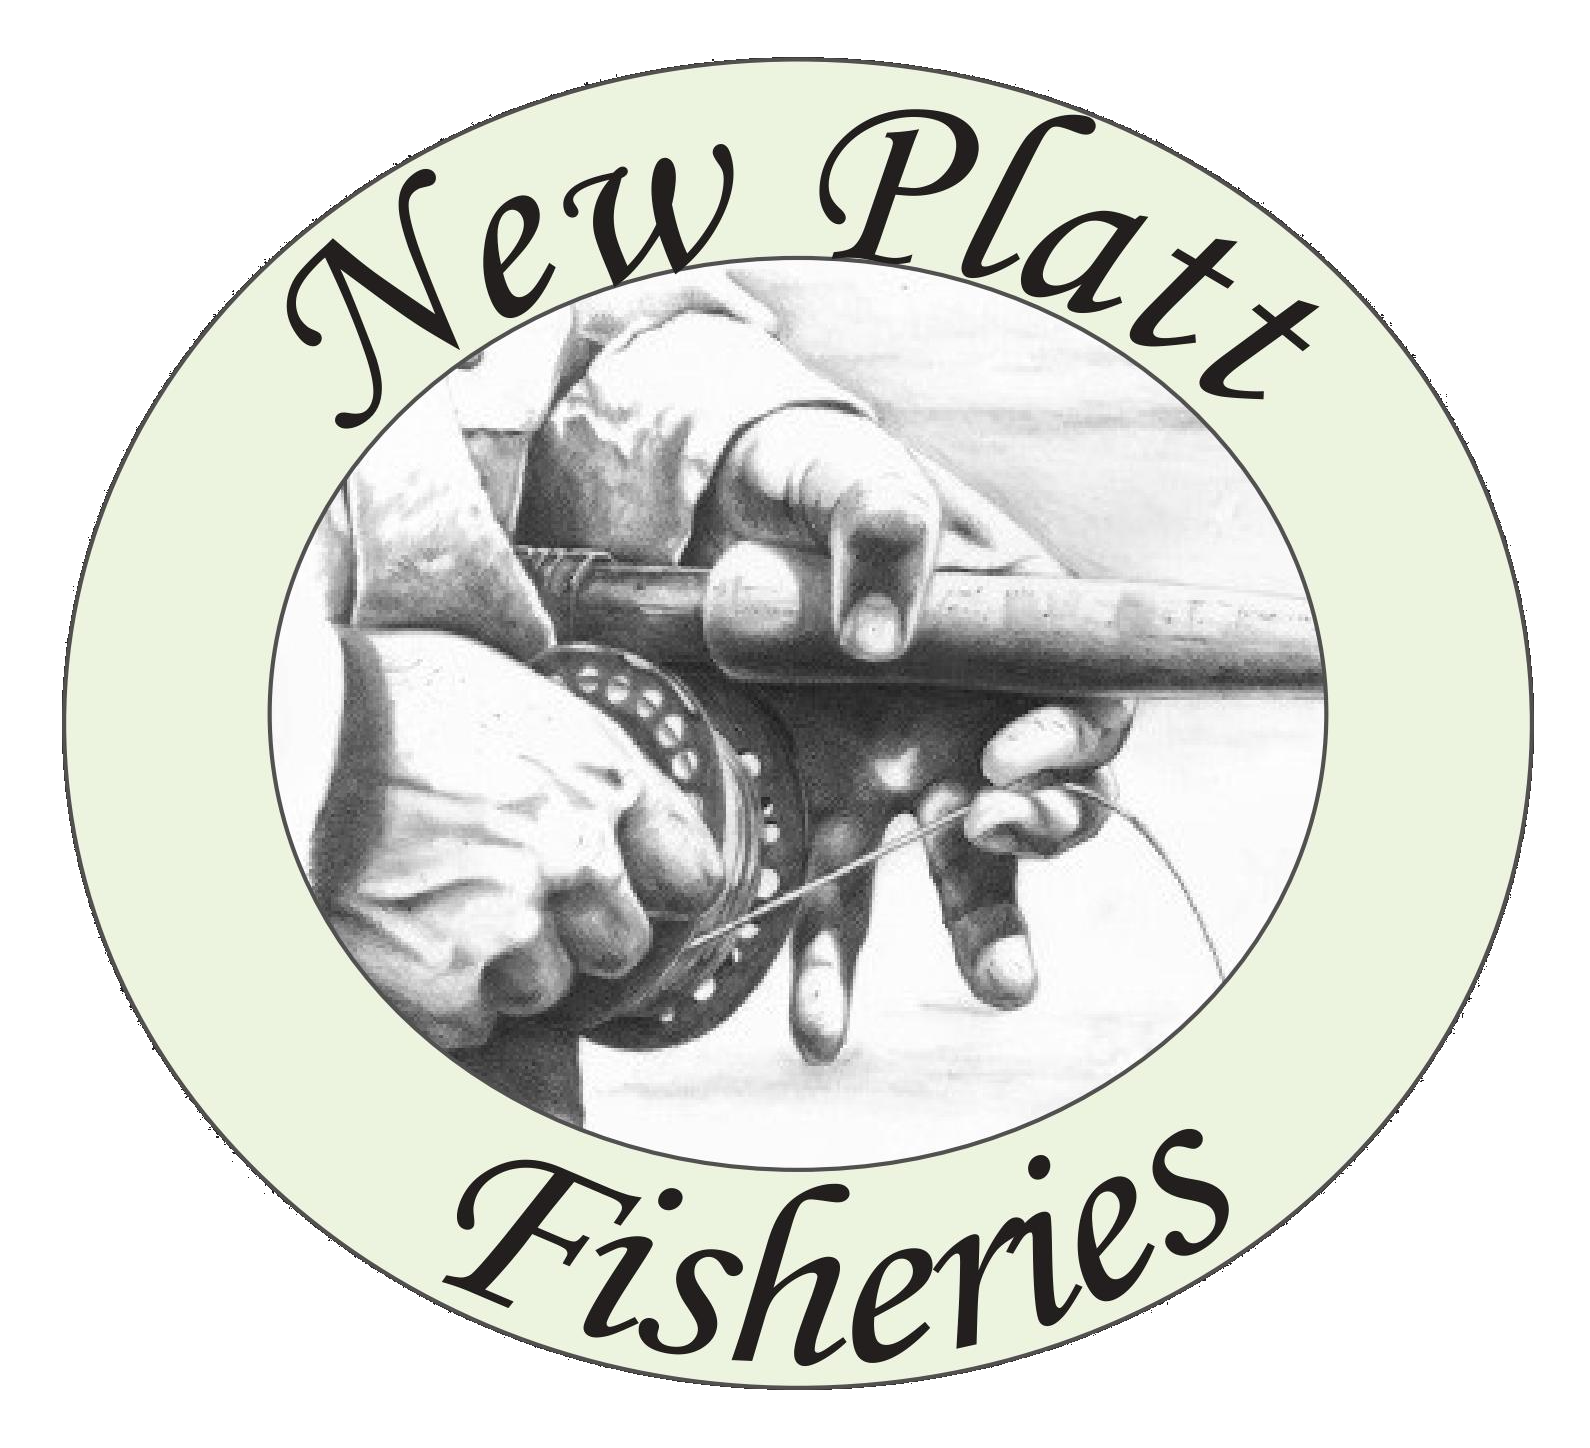 New Platt Fisheries